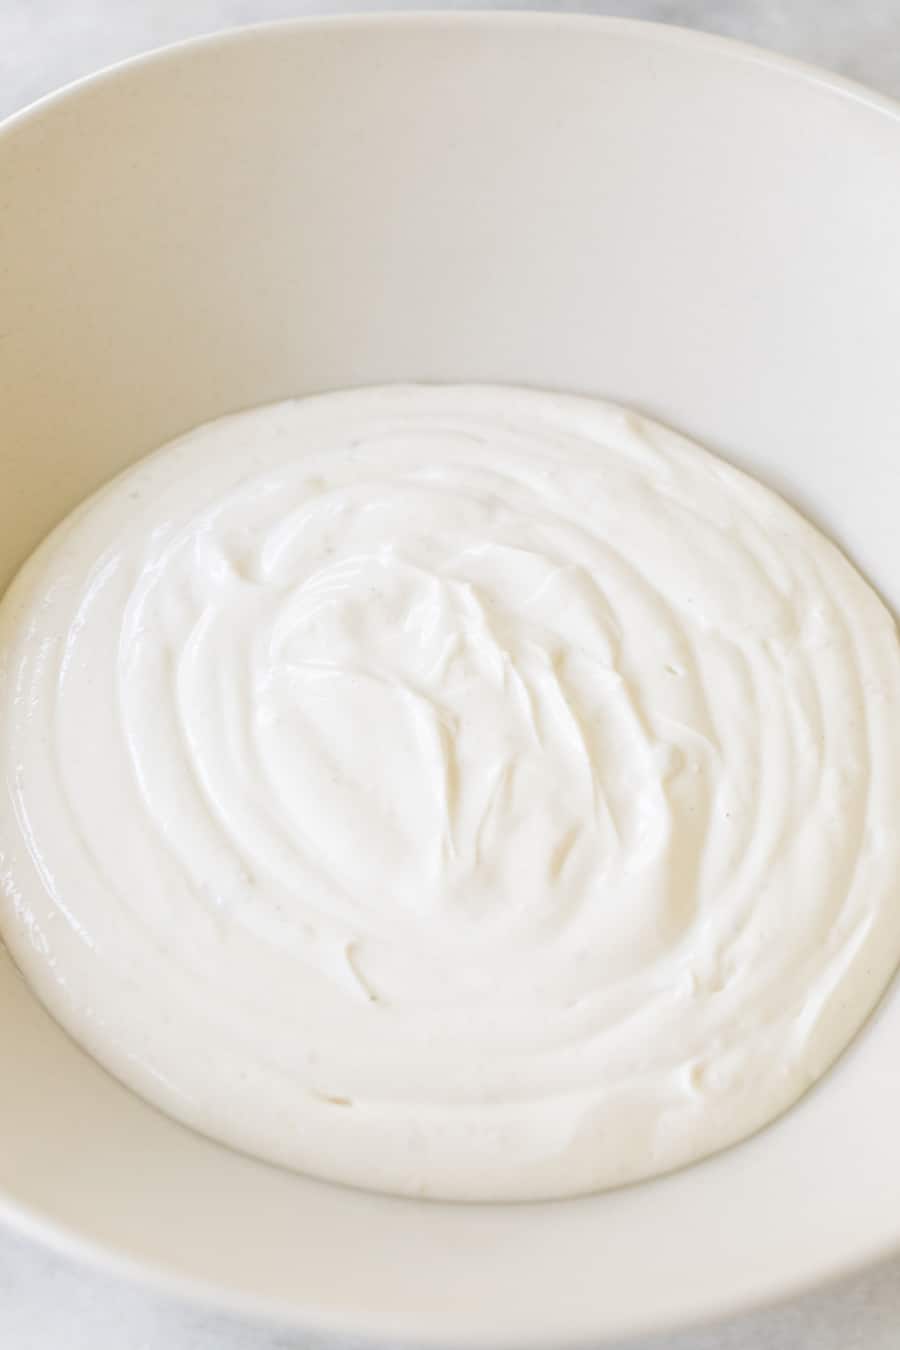 Yogurt in a white bowl.